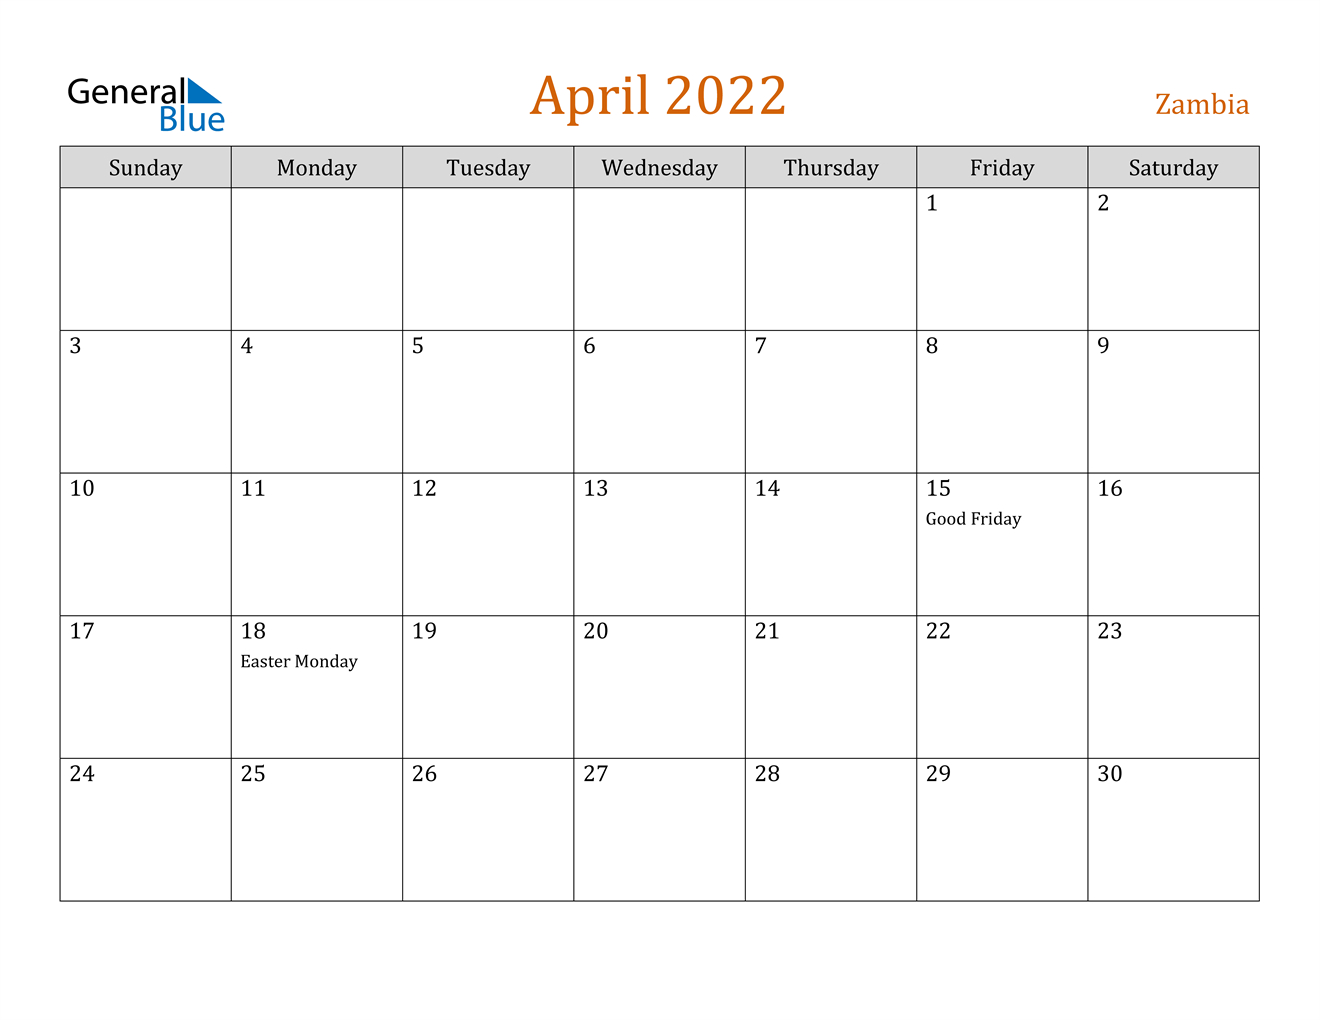 April 2022 Calendar - Zambia